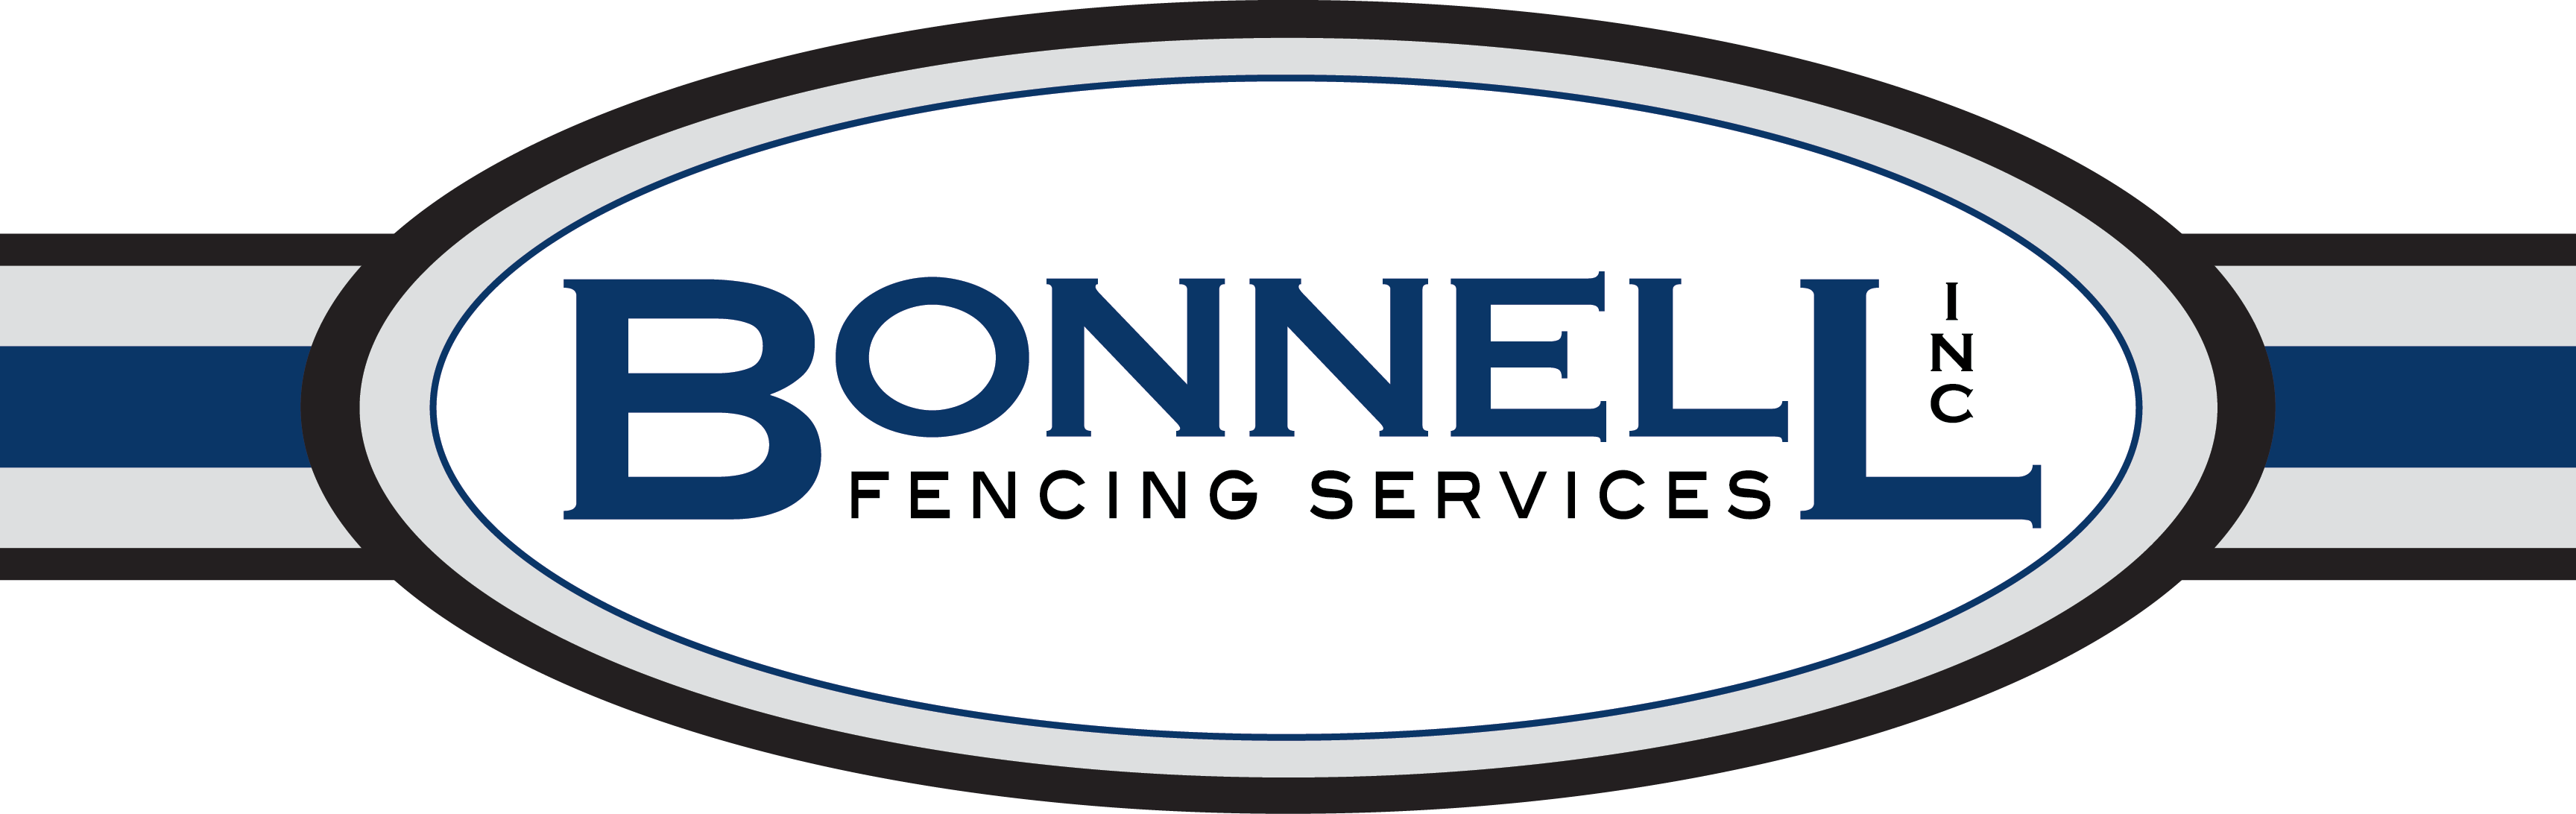 Bonnell Fencing Services